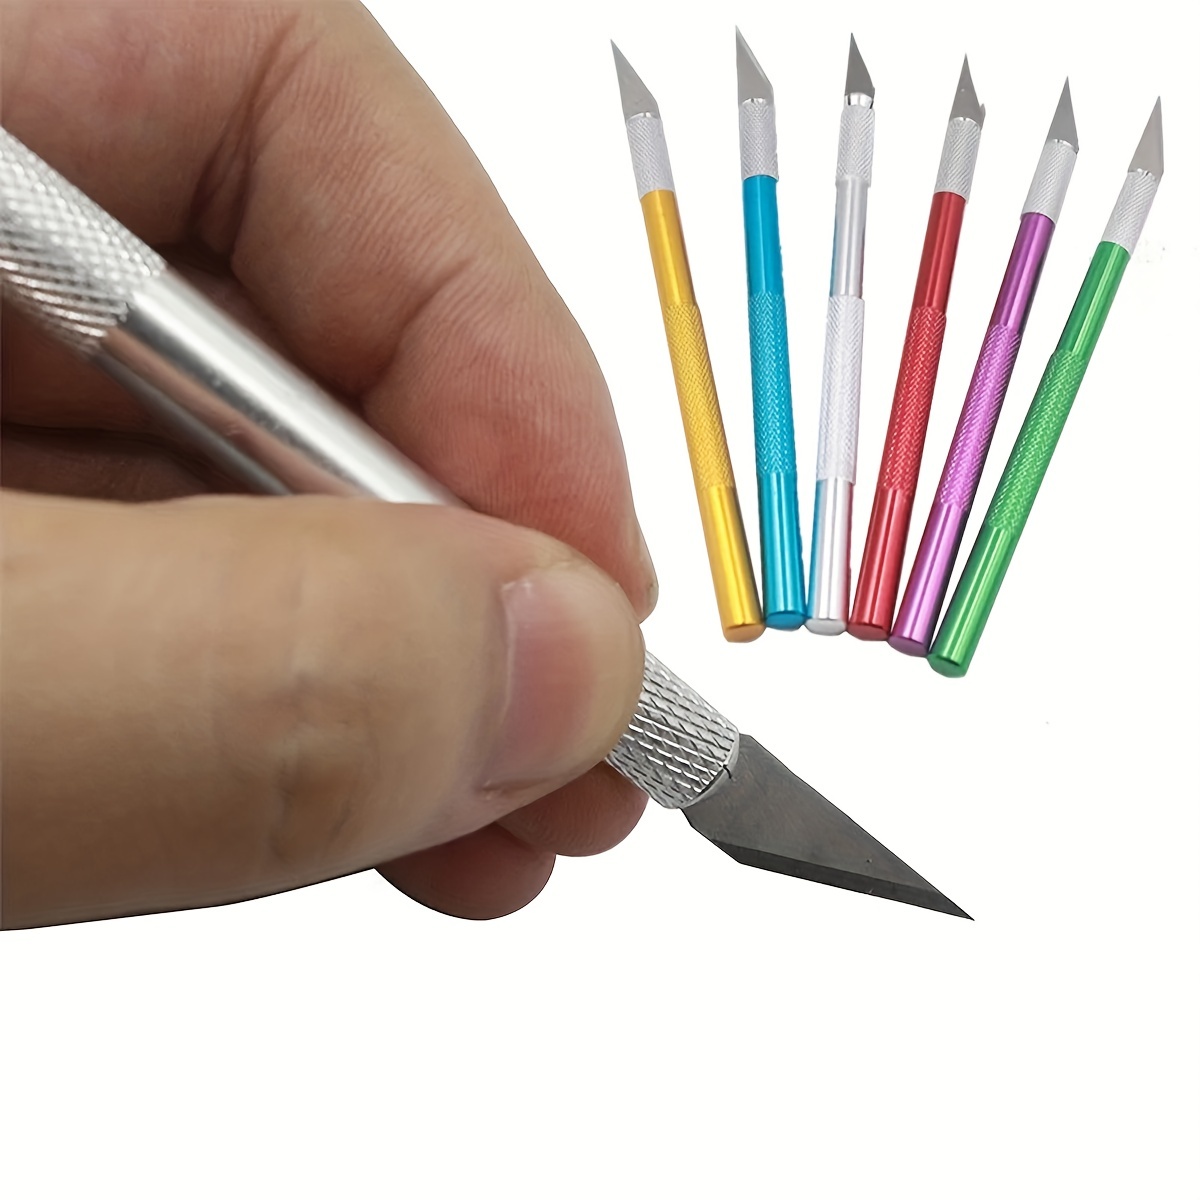 Paper Ceramic Cutter Pen Diamond Painting Cross Stitch Diy Crafts